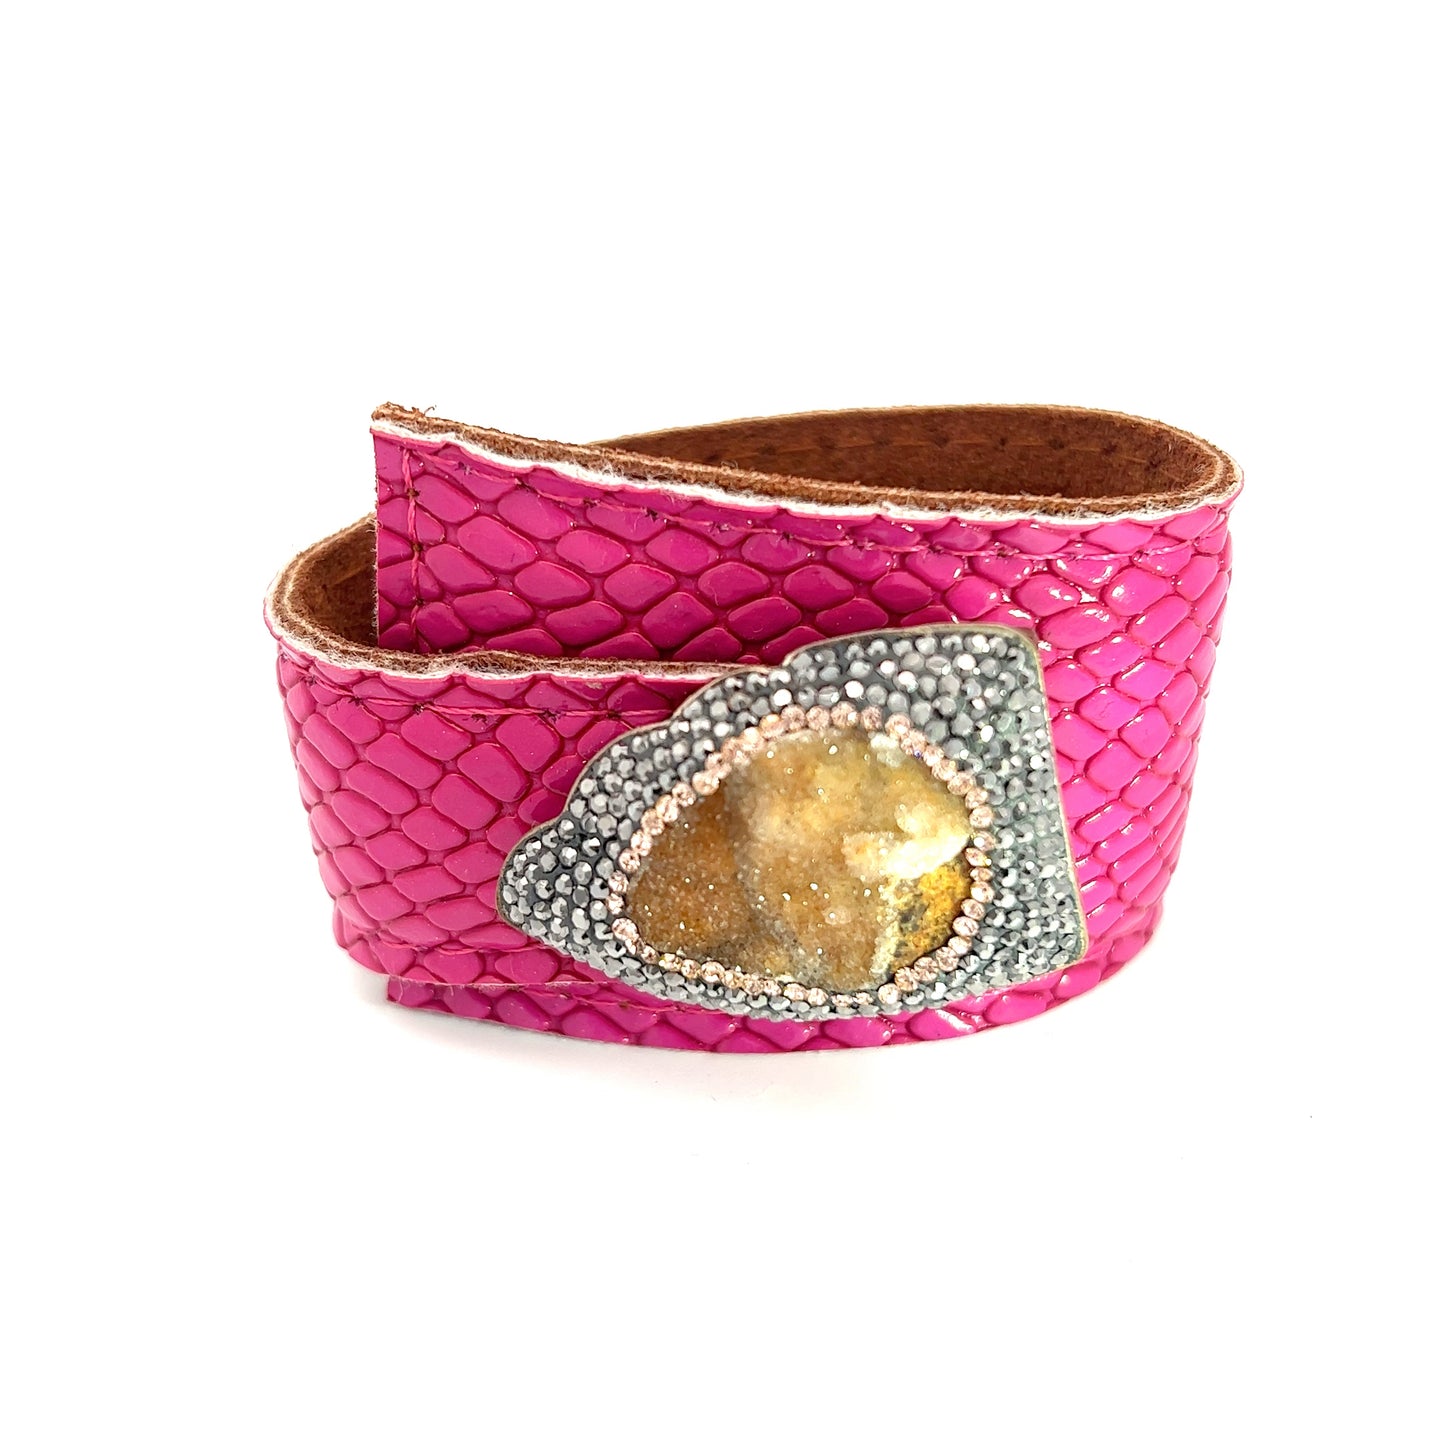 Load image into Gallery viewer, Hot Pink Snakeskin Leather Wraparound Gemstone Bracelet - Born To Glam
